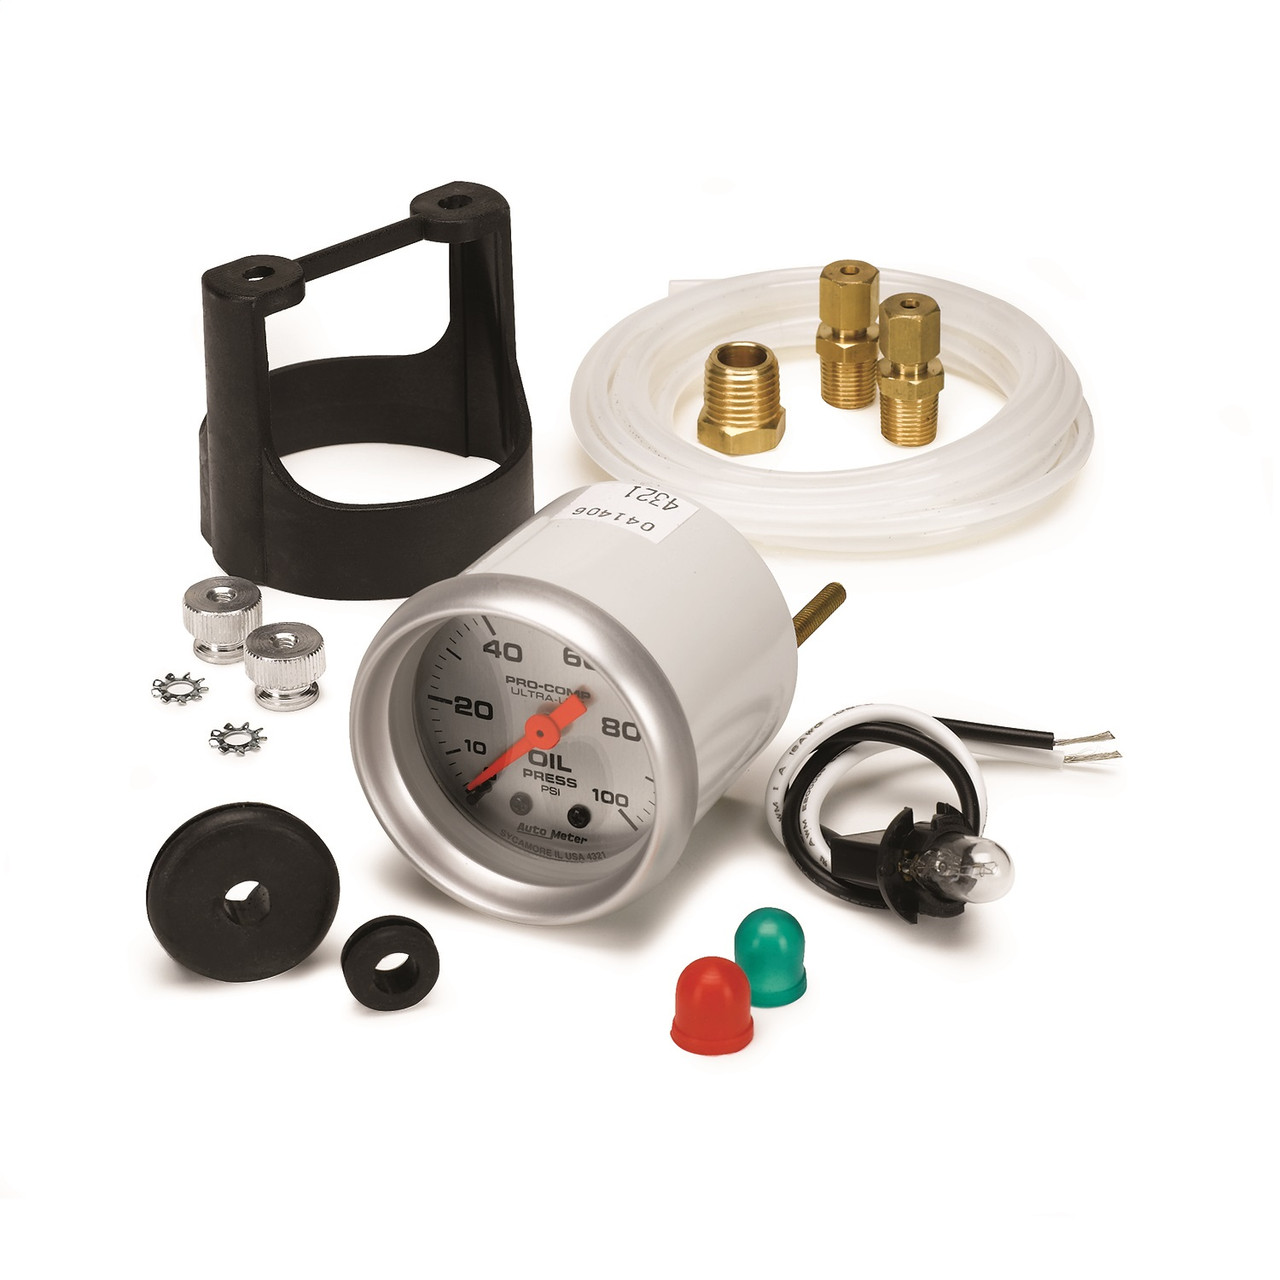 AutoMeter 4321 Ultra-Lite Mechanical Oil Pressure Gauge